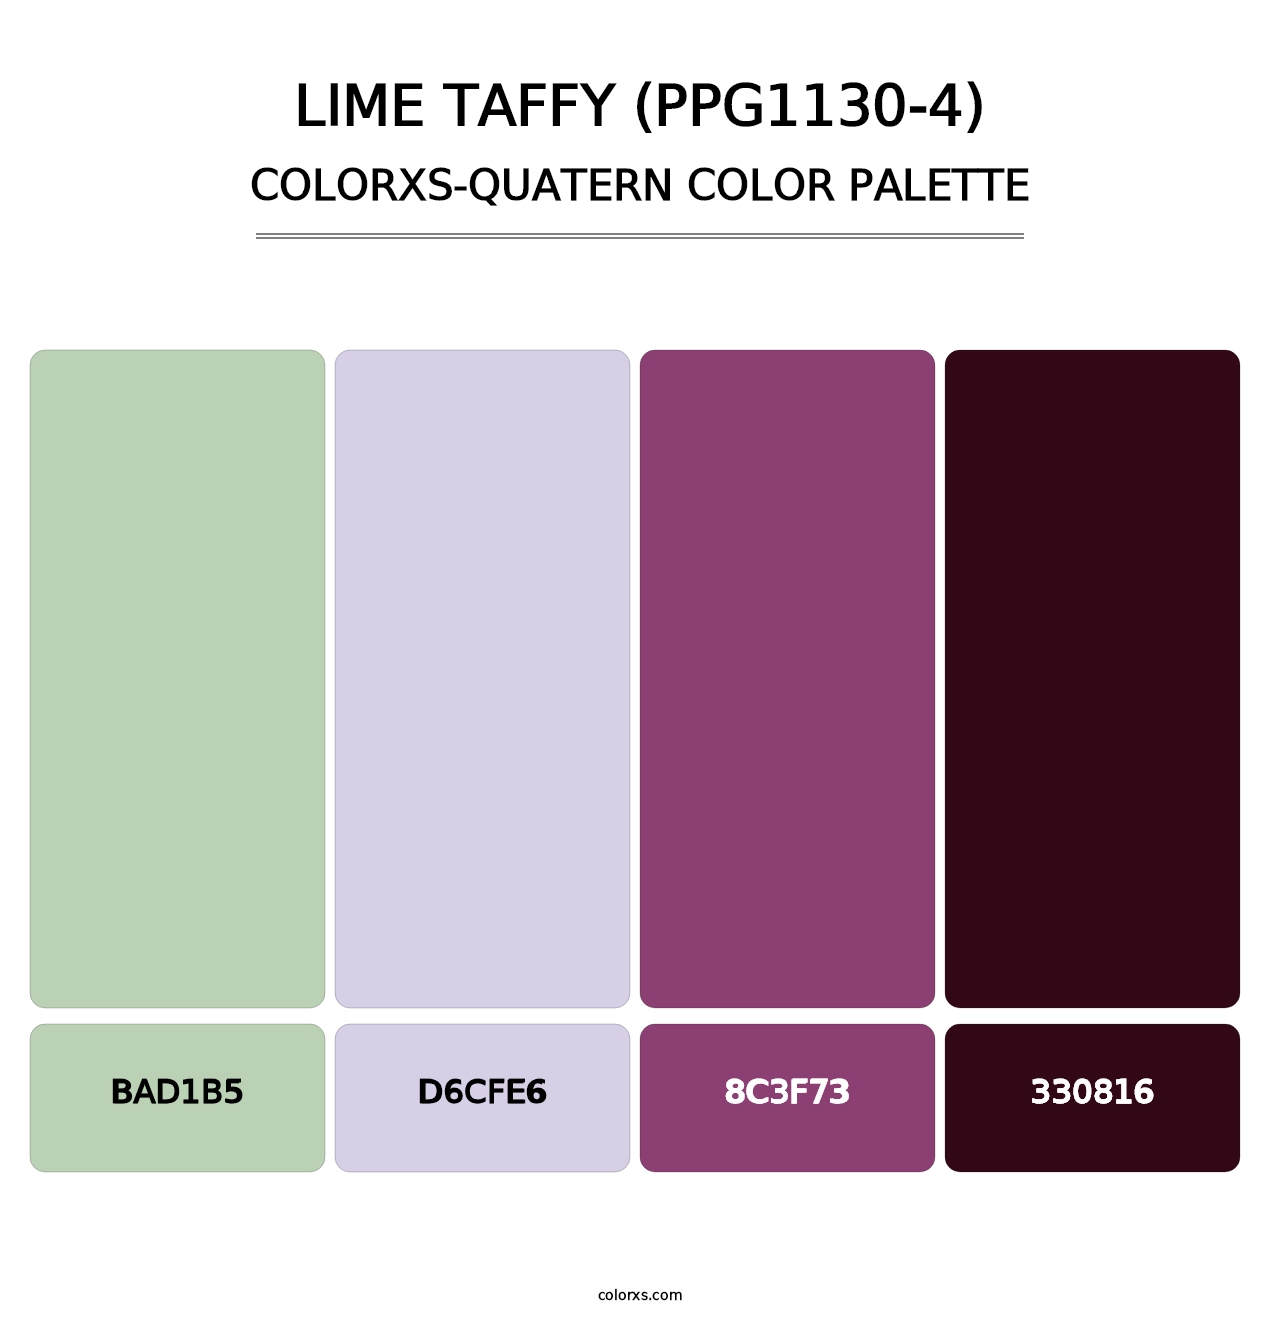 Lime Taffy (PPG1130-4) - Colorxs Quatern Palette